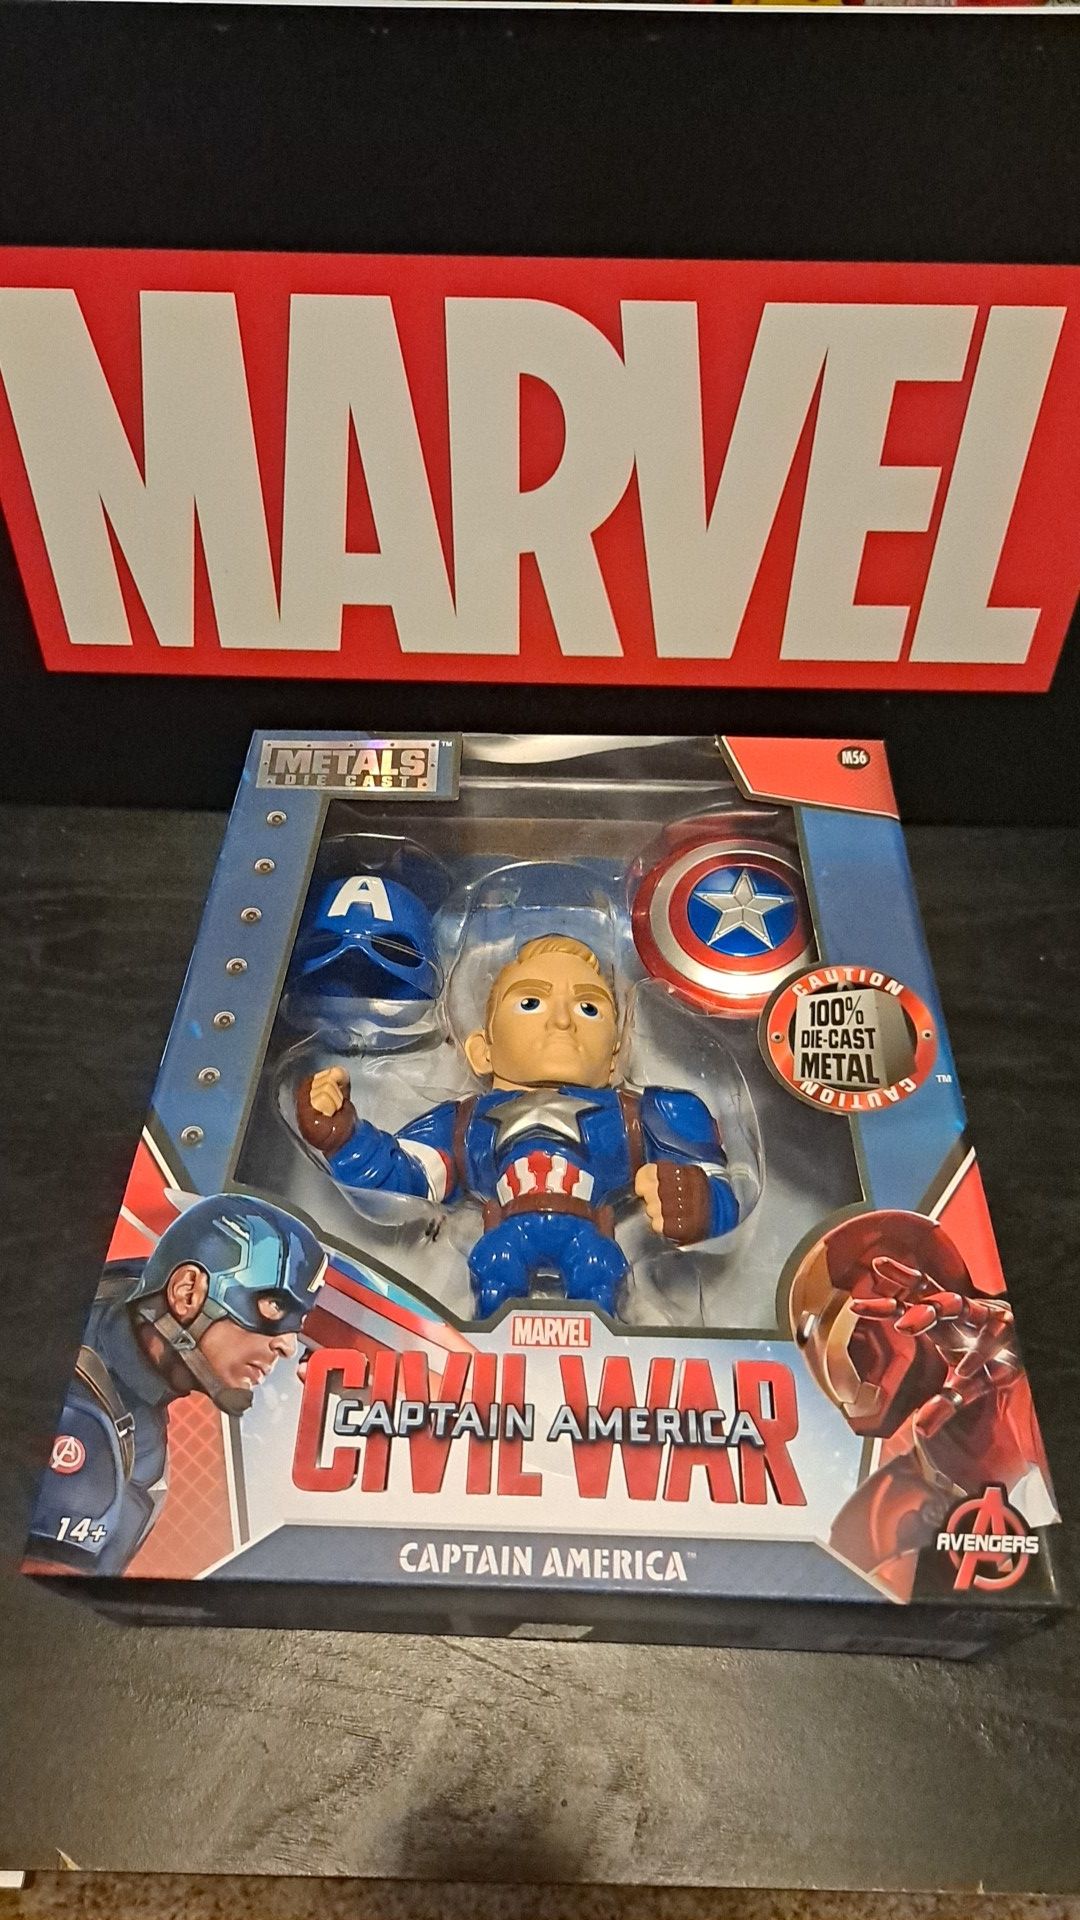 Marvel Metals die cast Civil War Captain America